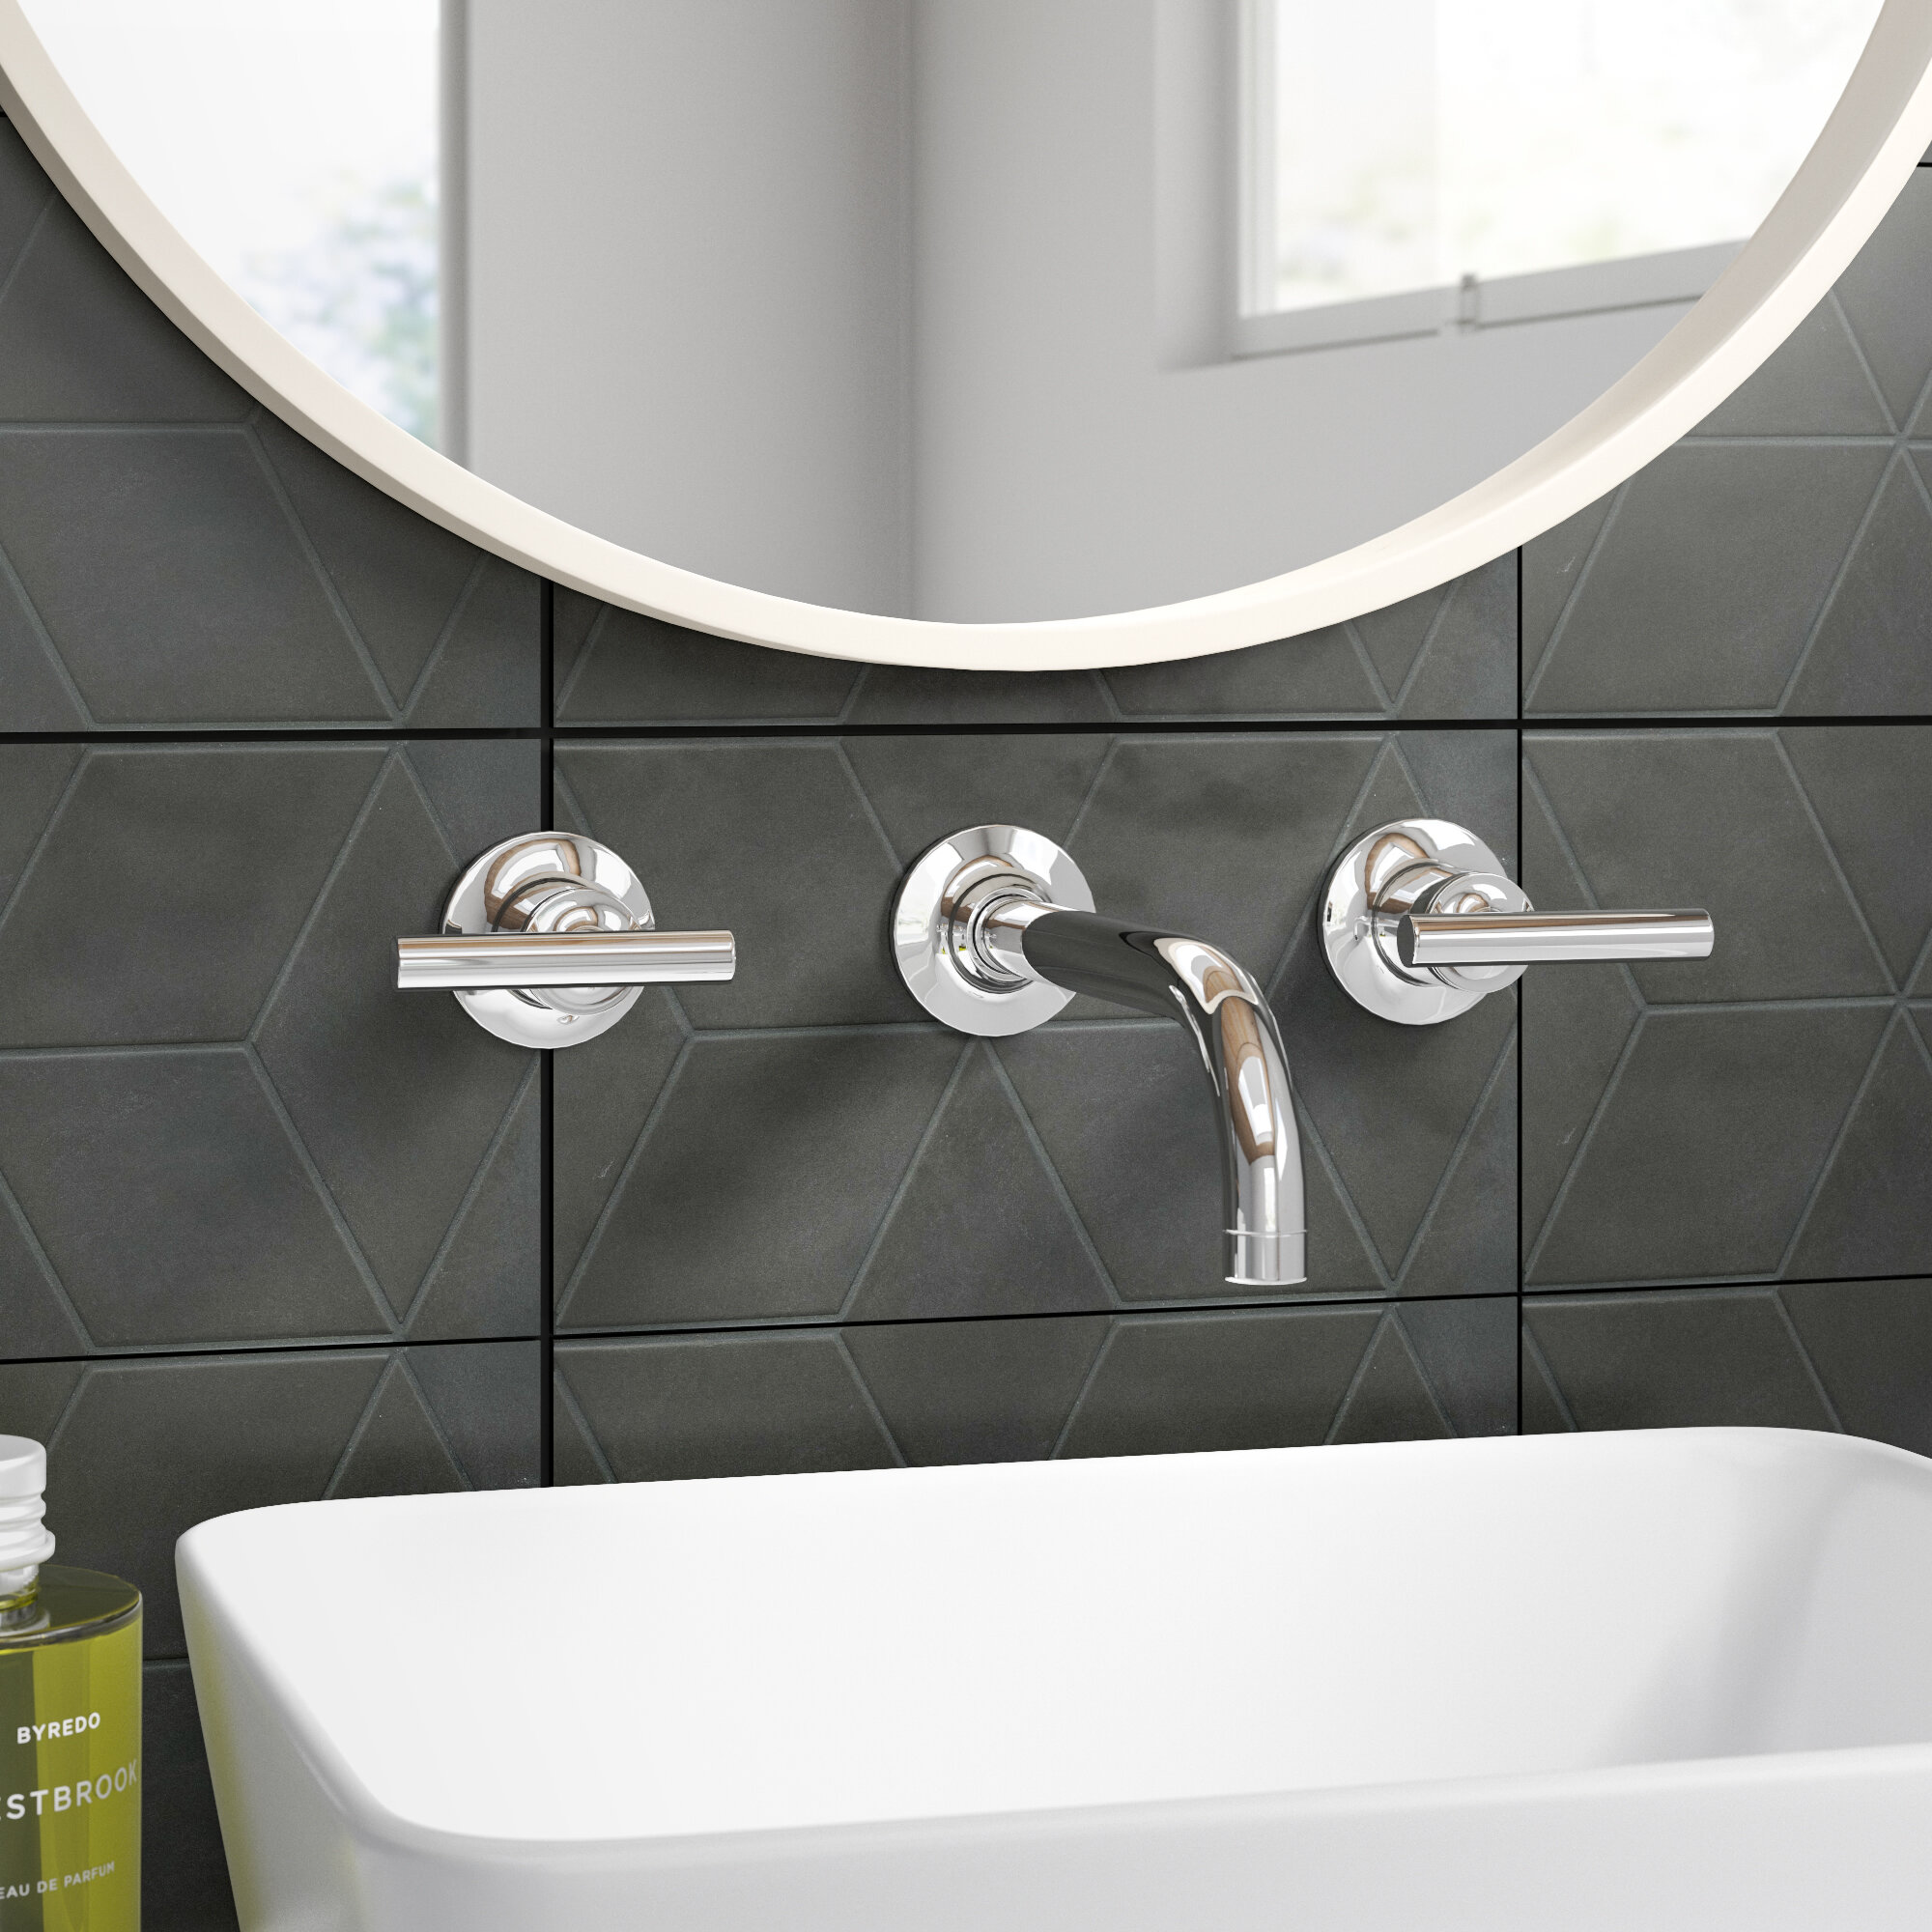 Kohler Purist® Wall Mounted Bathroom Faucet  Reviews Wayfair Canada